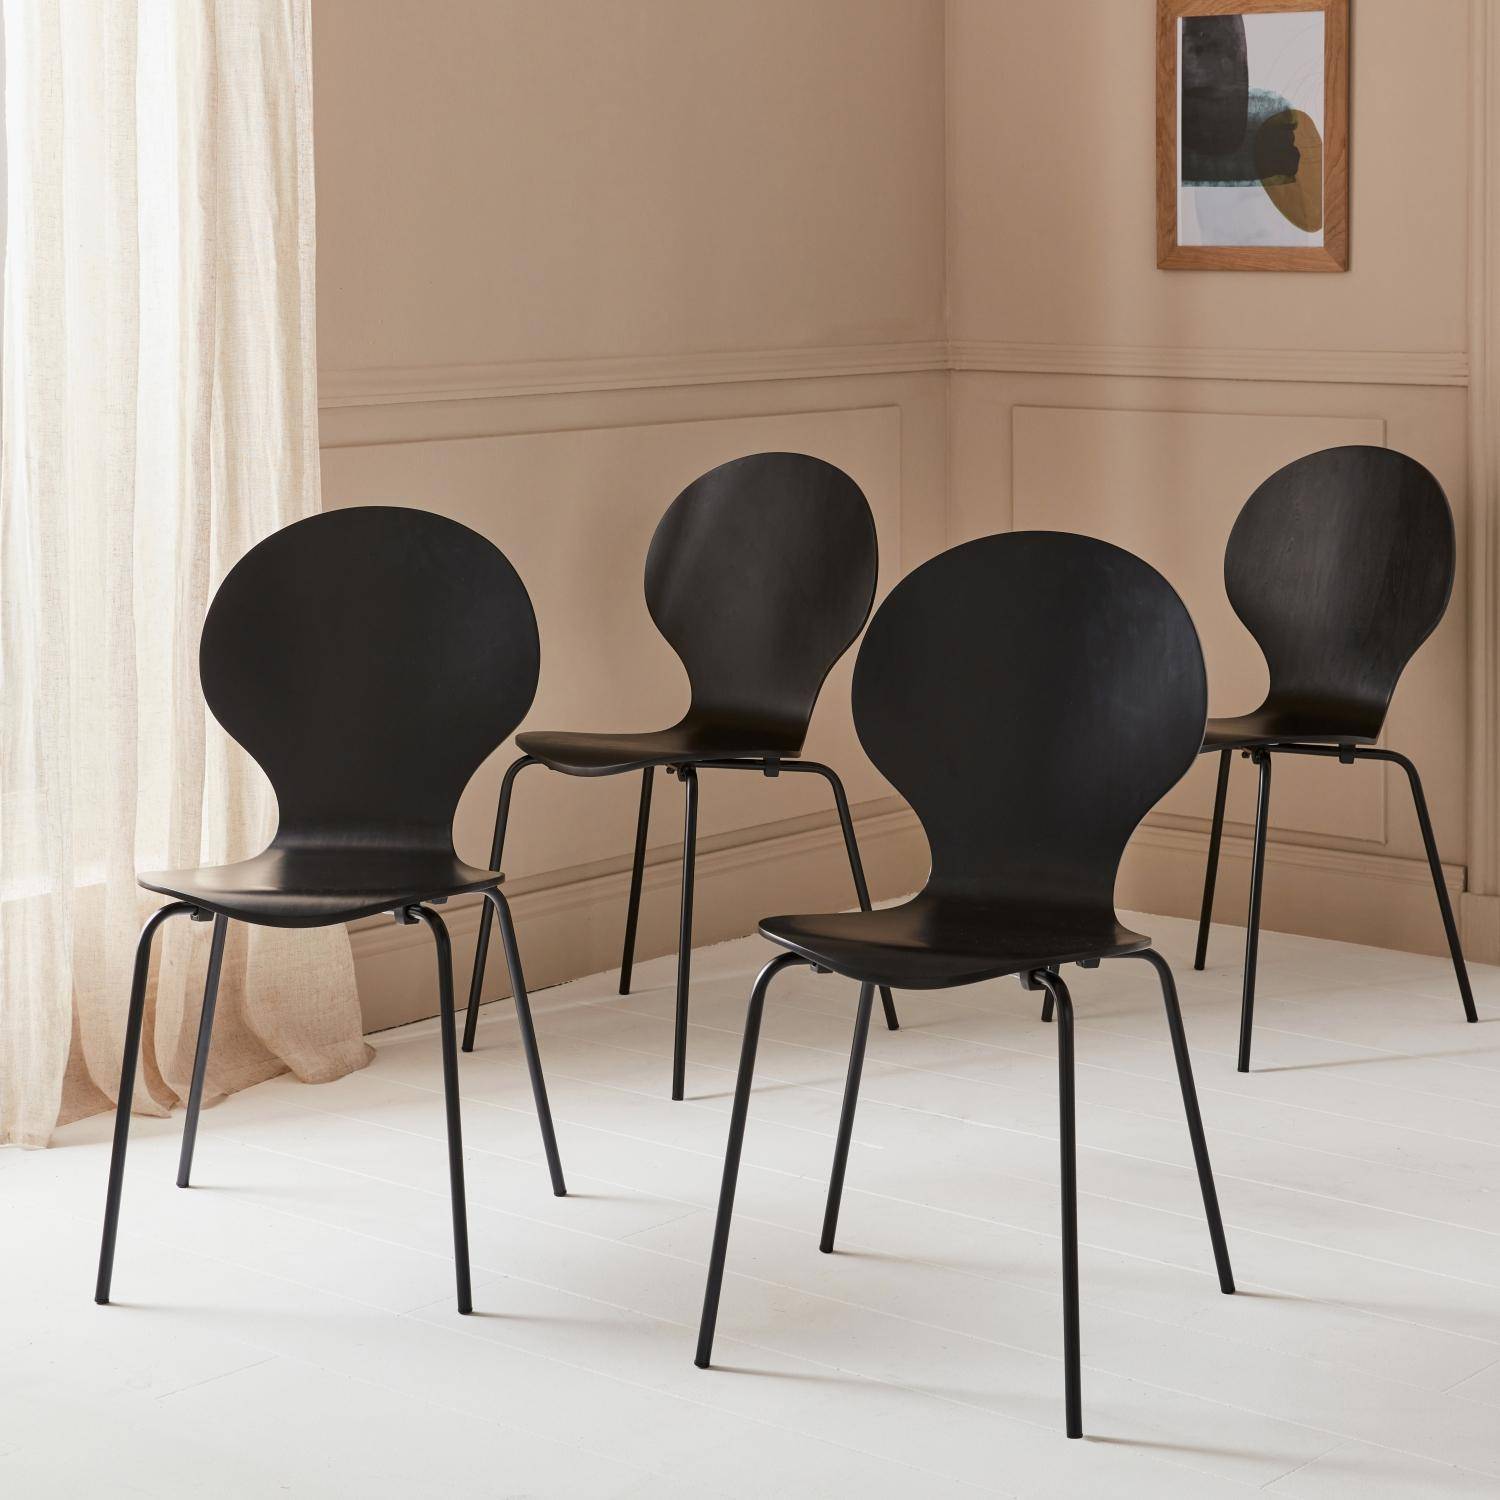 Set van 4 zwarte retro stapelstoelen, hevea hout en multiplex, stalen poten, Naomi, B 43 x D 48 x H 87cm Photo2